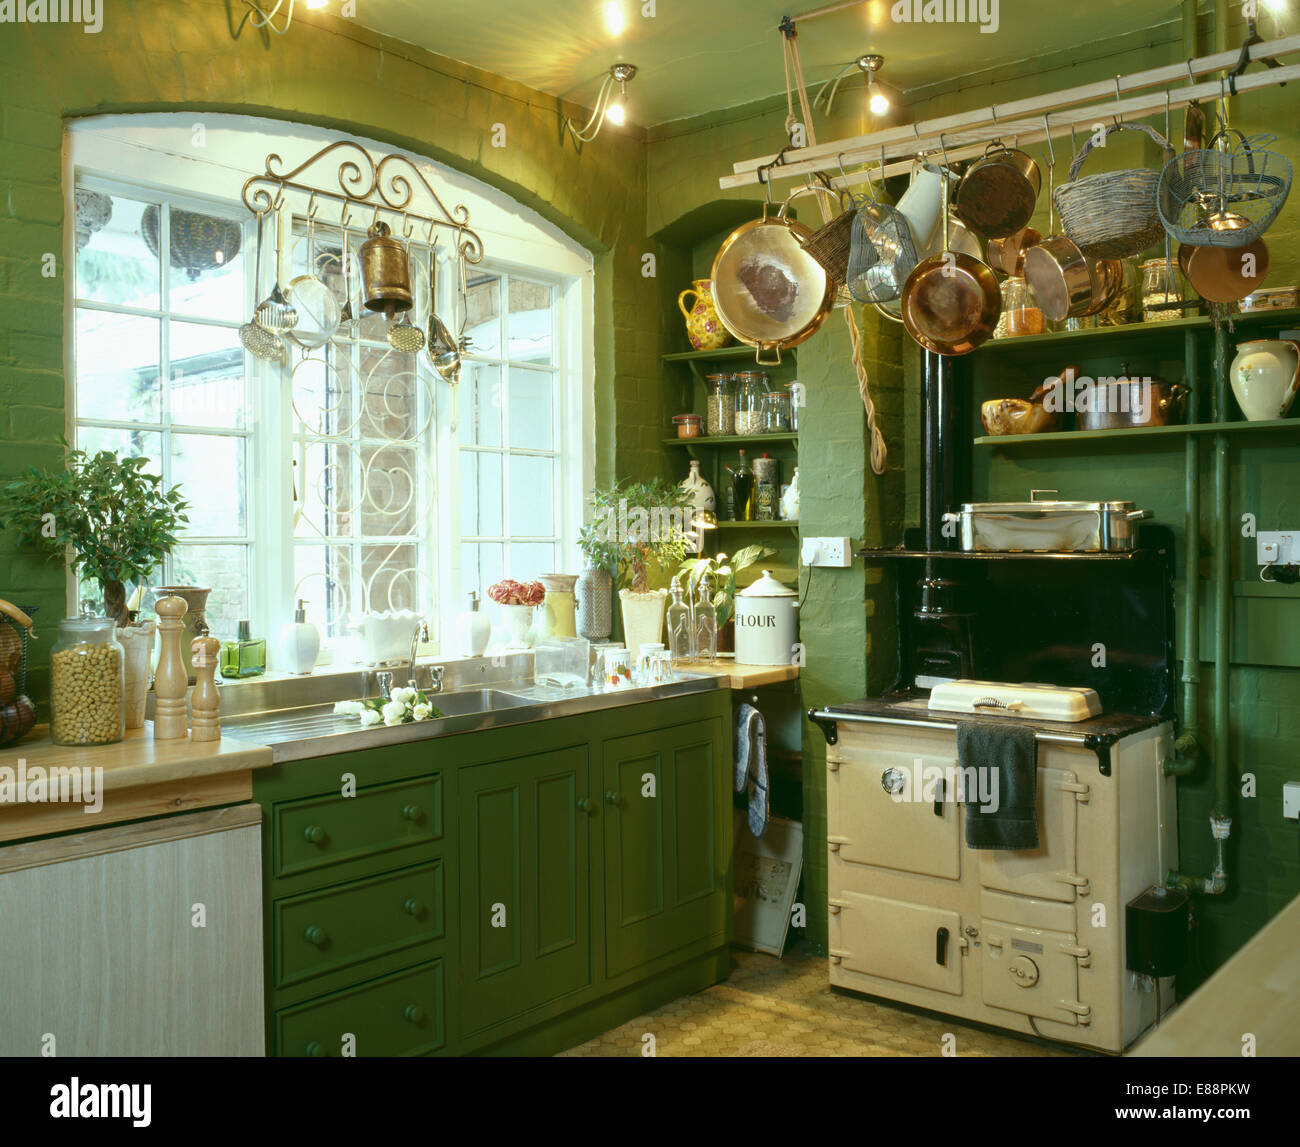 Batterie-de-Cuisine above cream Aga oven in traditional green kitchen Stock Photo